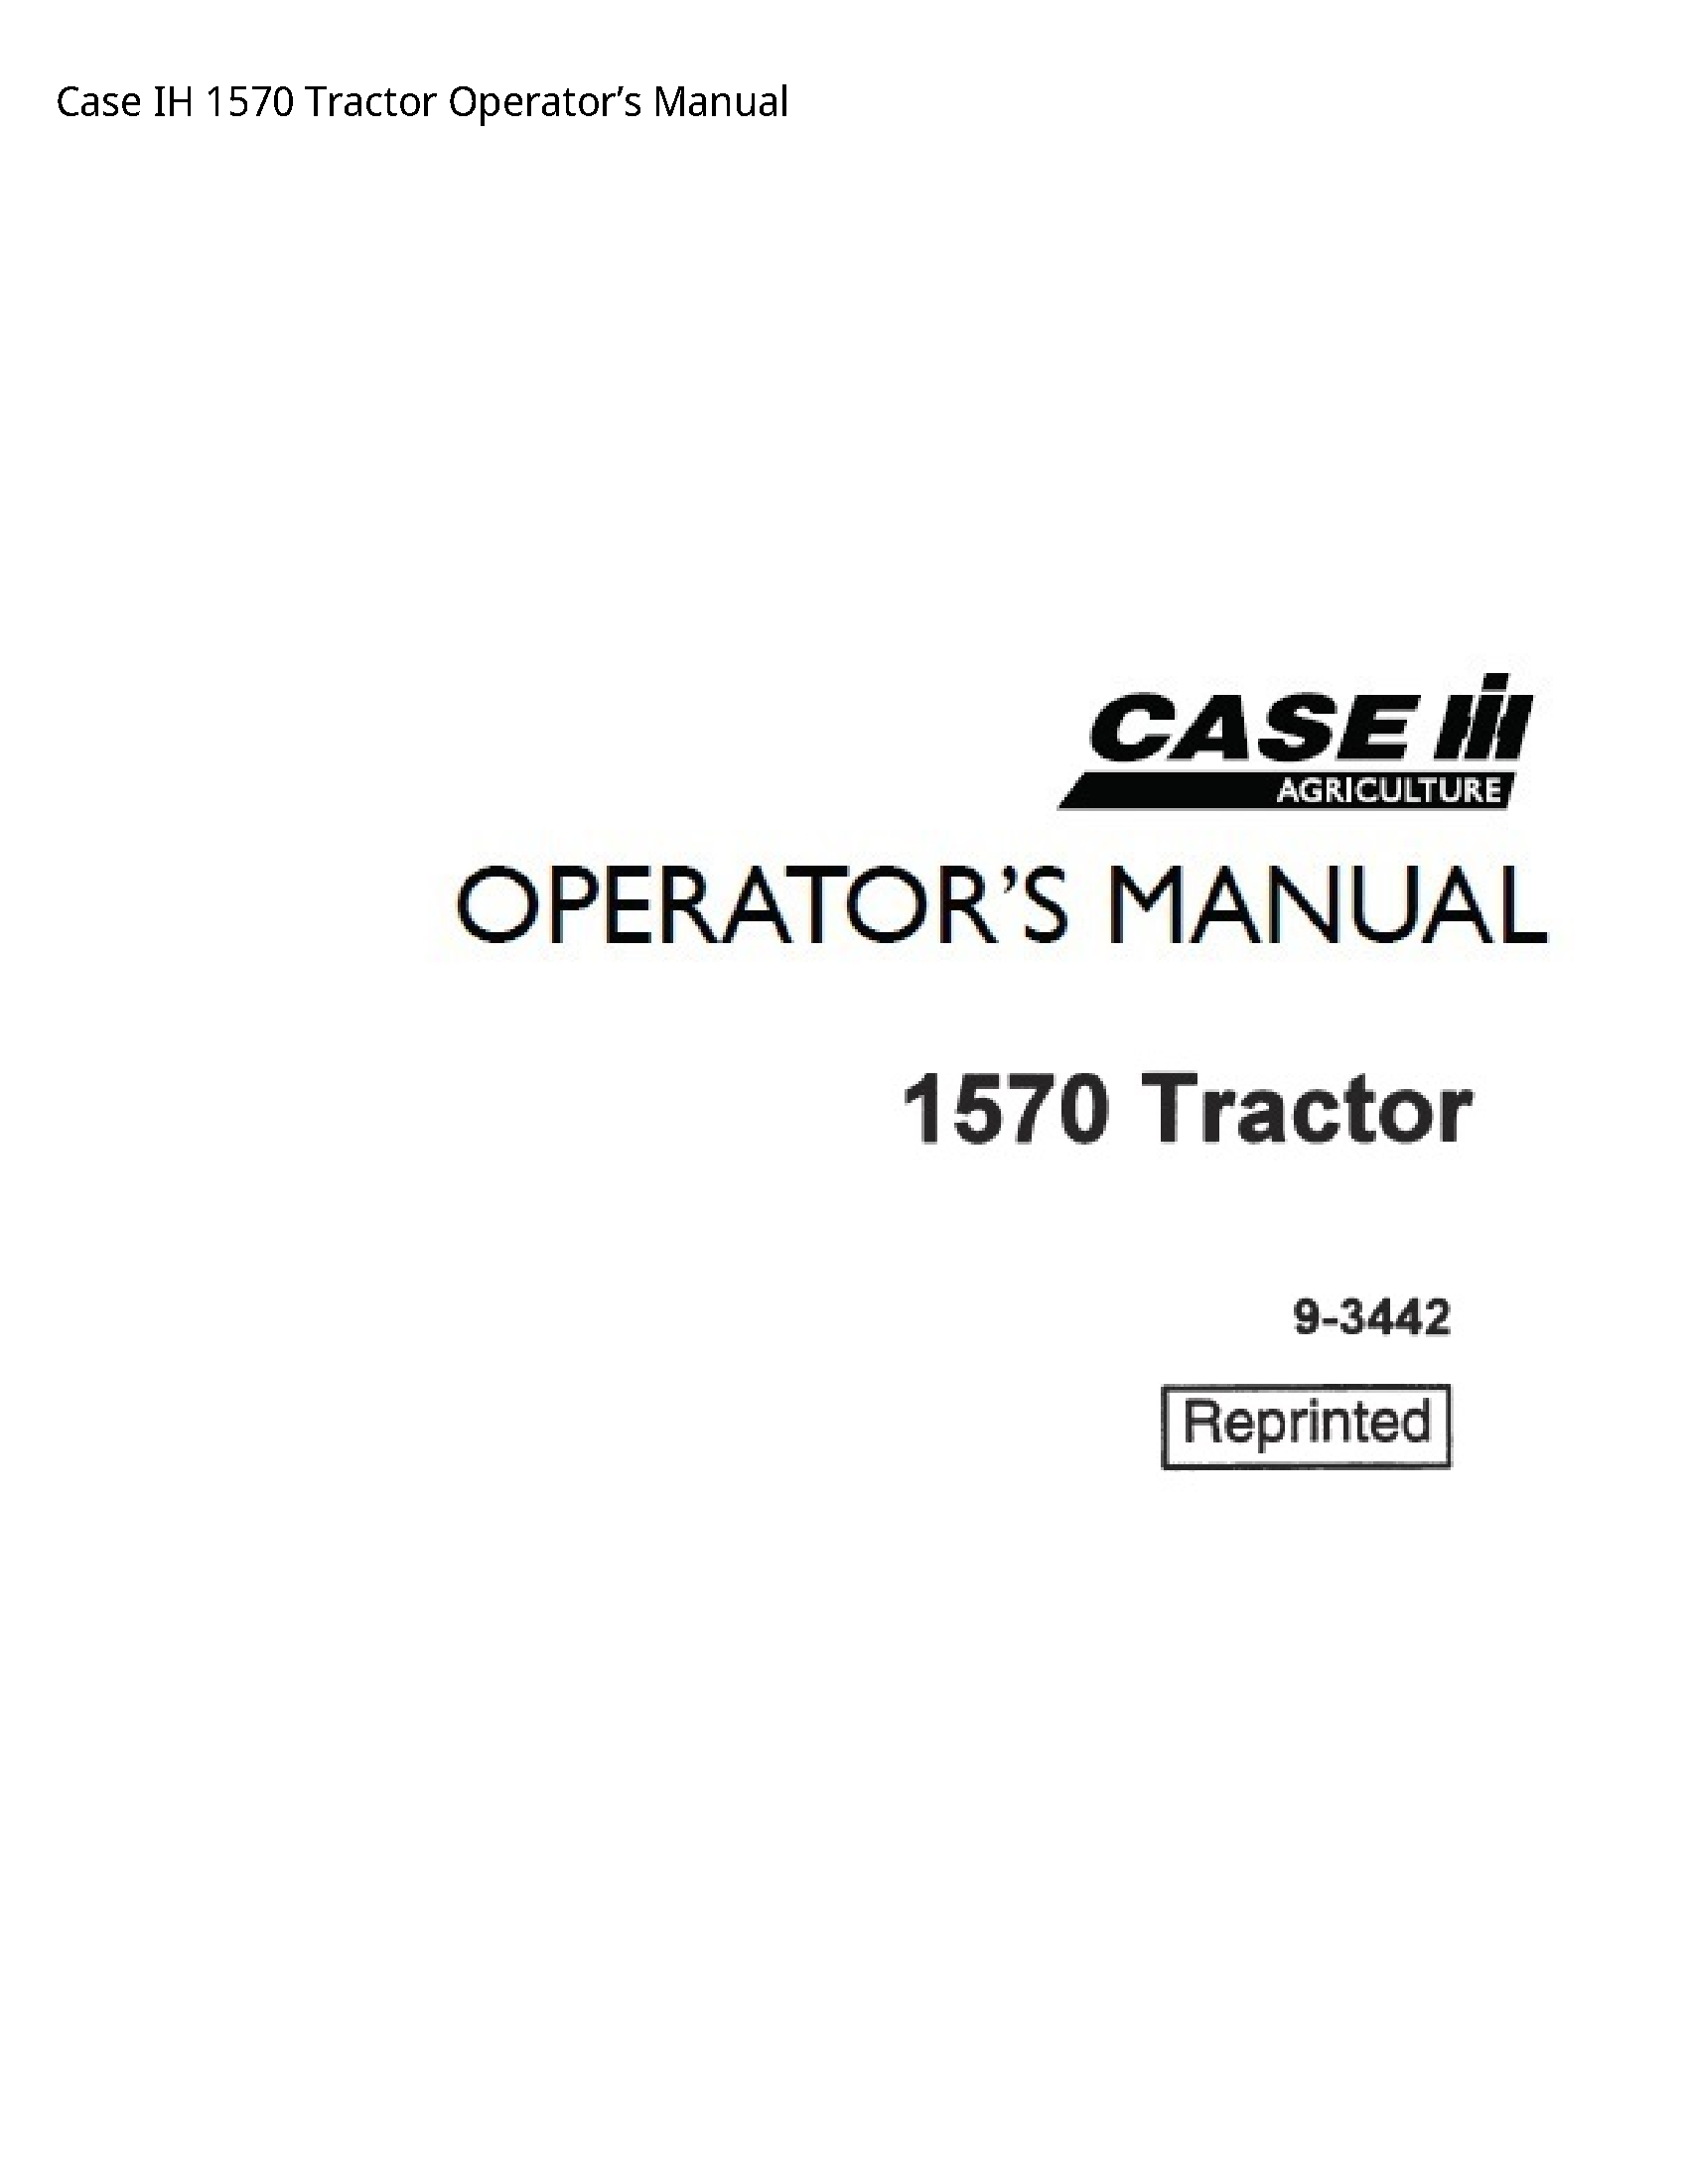 Case/Case IH 1570 IH Tractor Operator’s manual